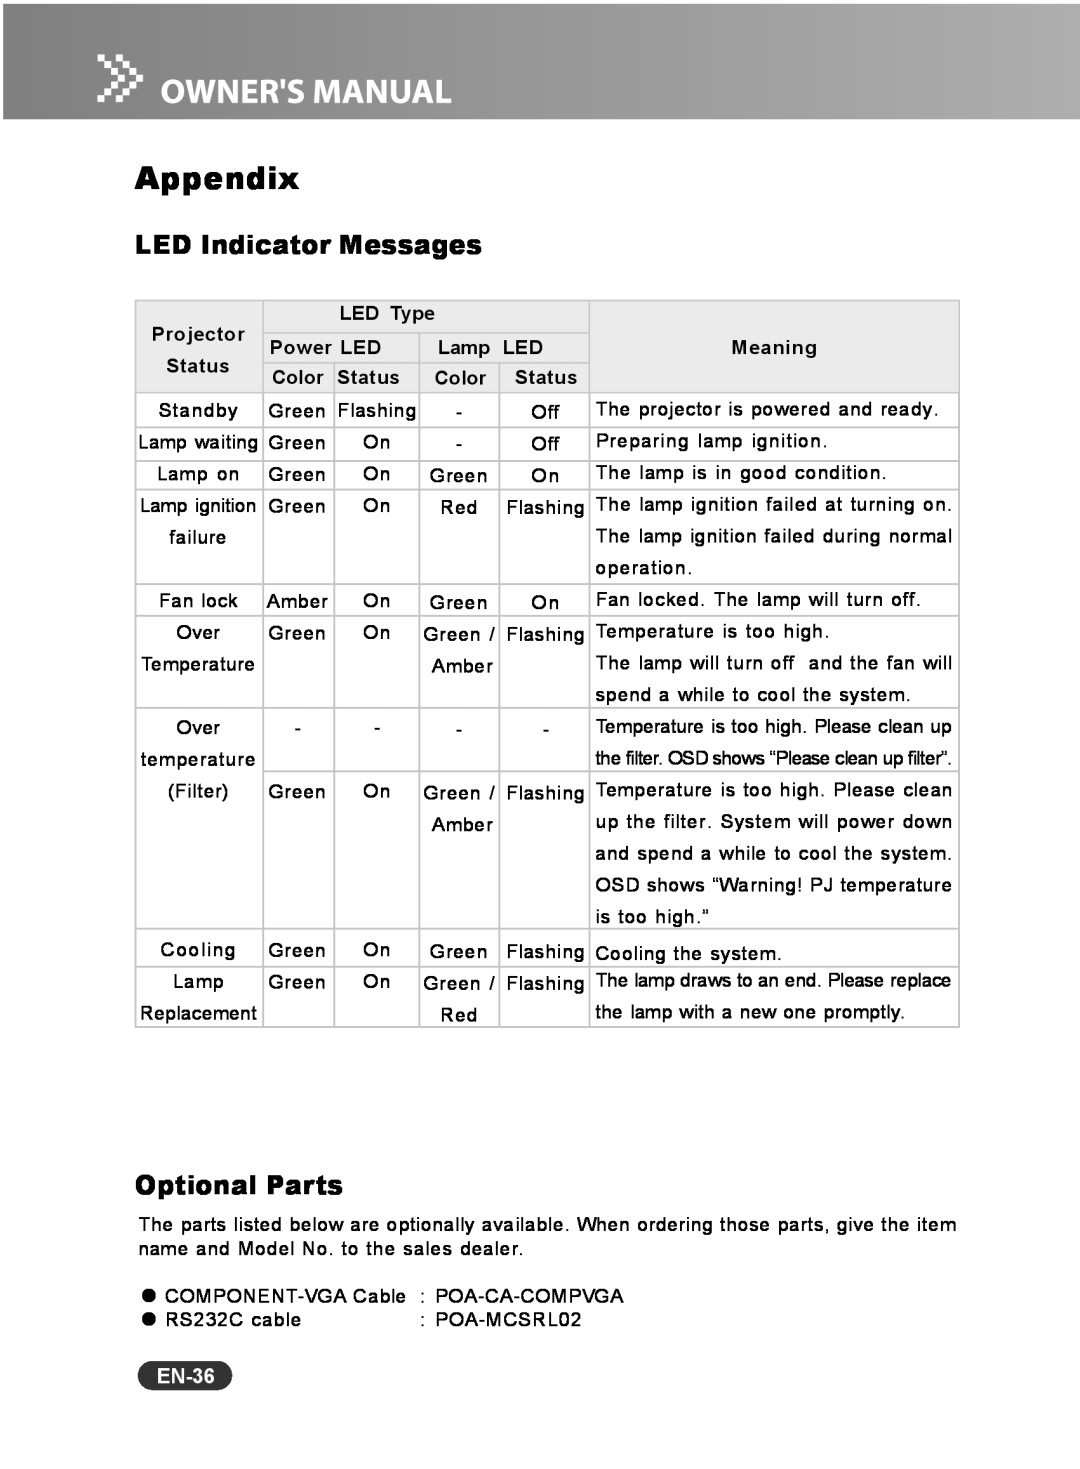 Sanyo PCL-WXU10E, PCL-WXU10N, PCL-WXU10B manual Appendix, LED Indicator Messages, Optional Parts, EN-36 